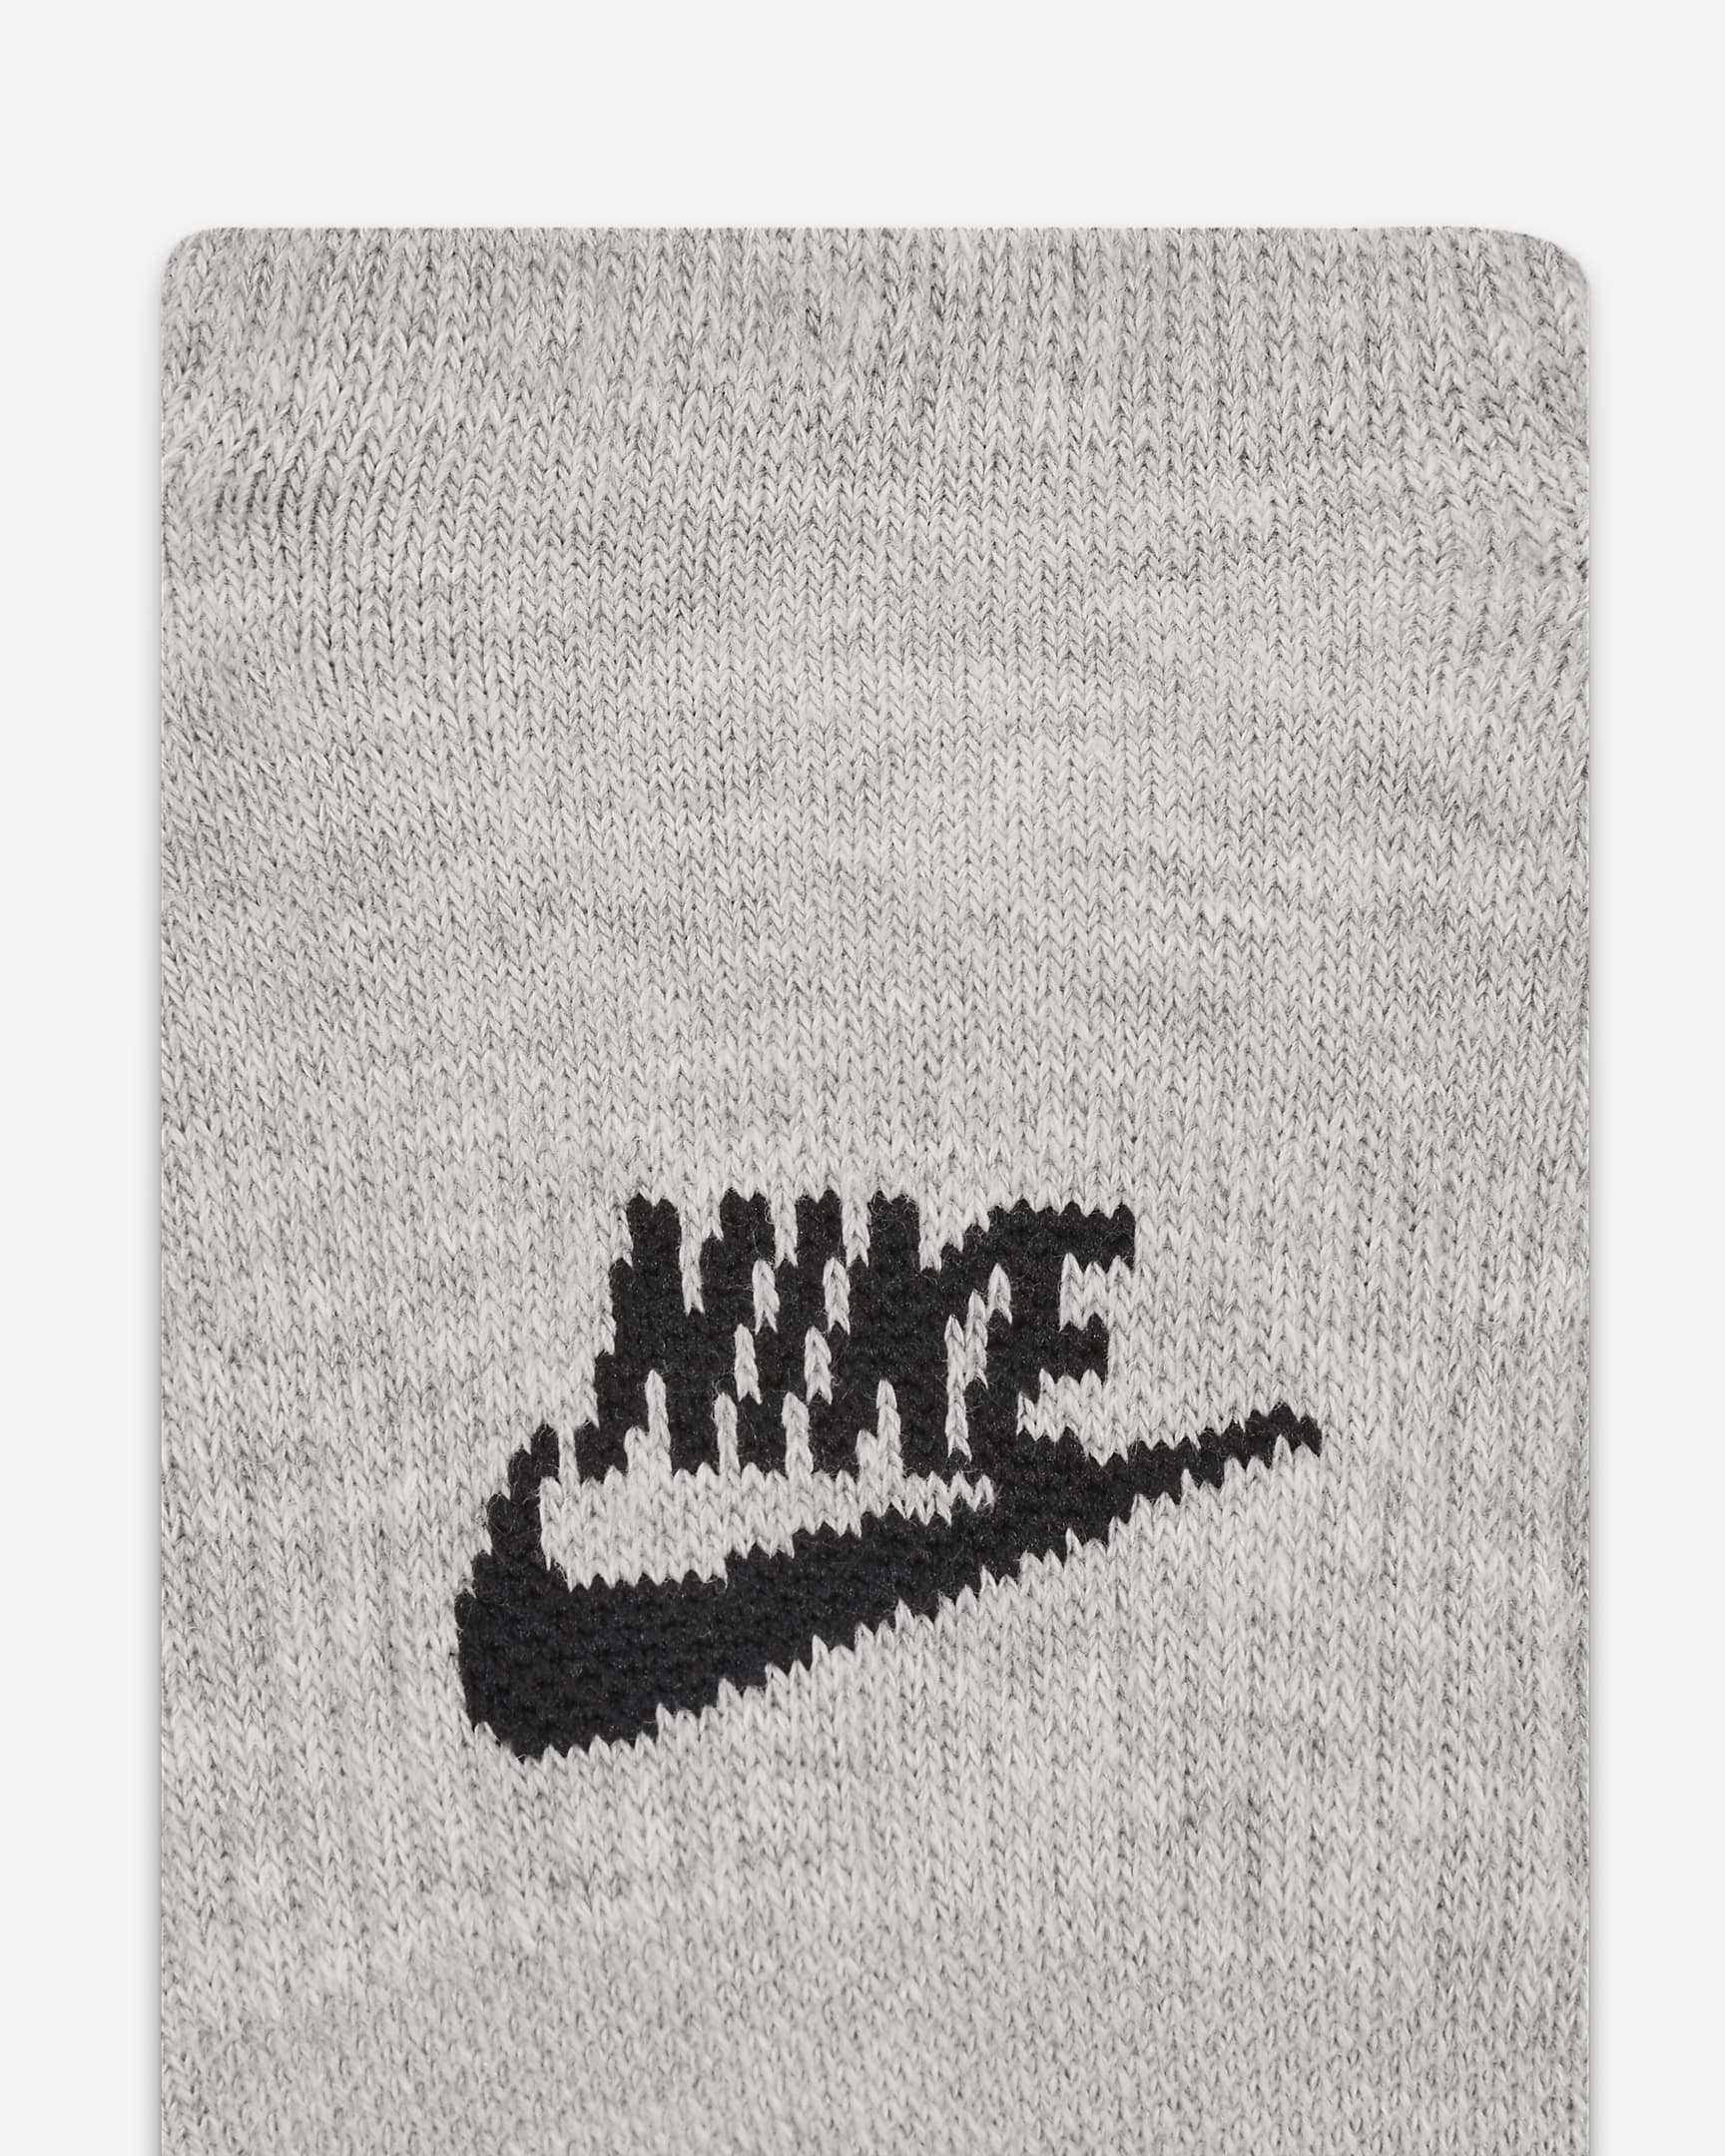 Everyday Plus Cushioned Nike Footie Socks - Dark Grey Heather/Black